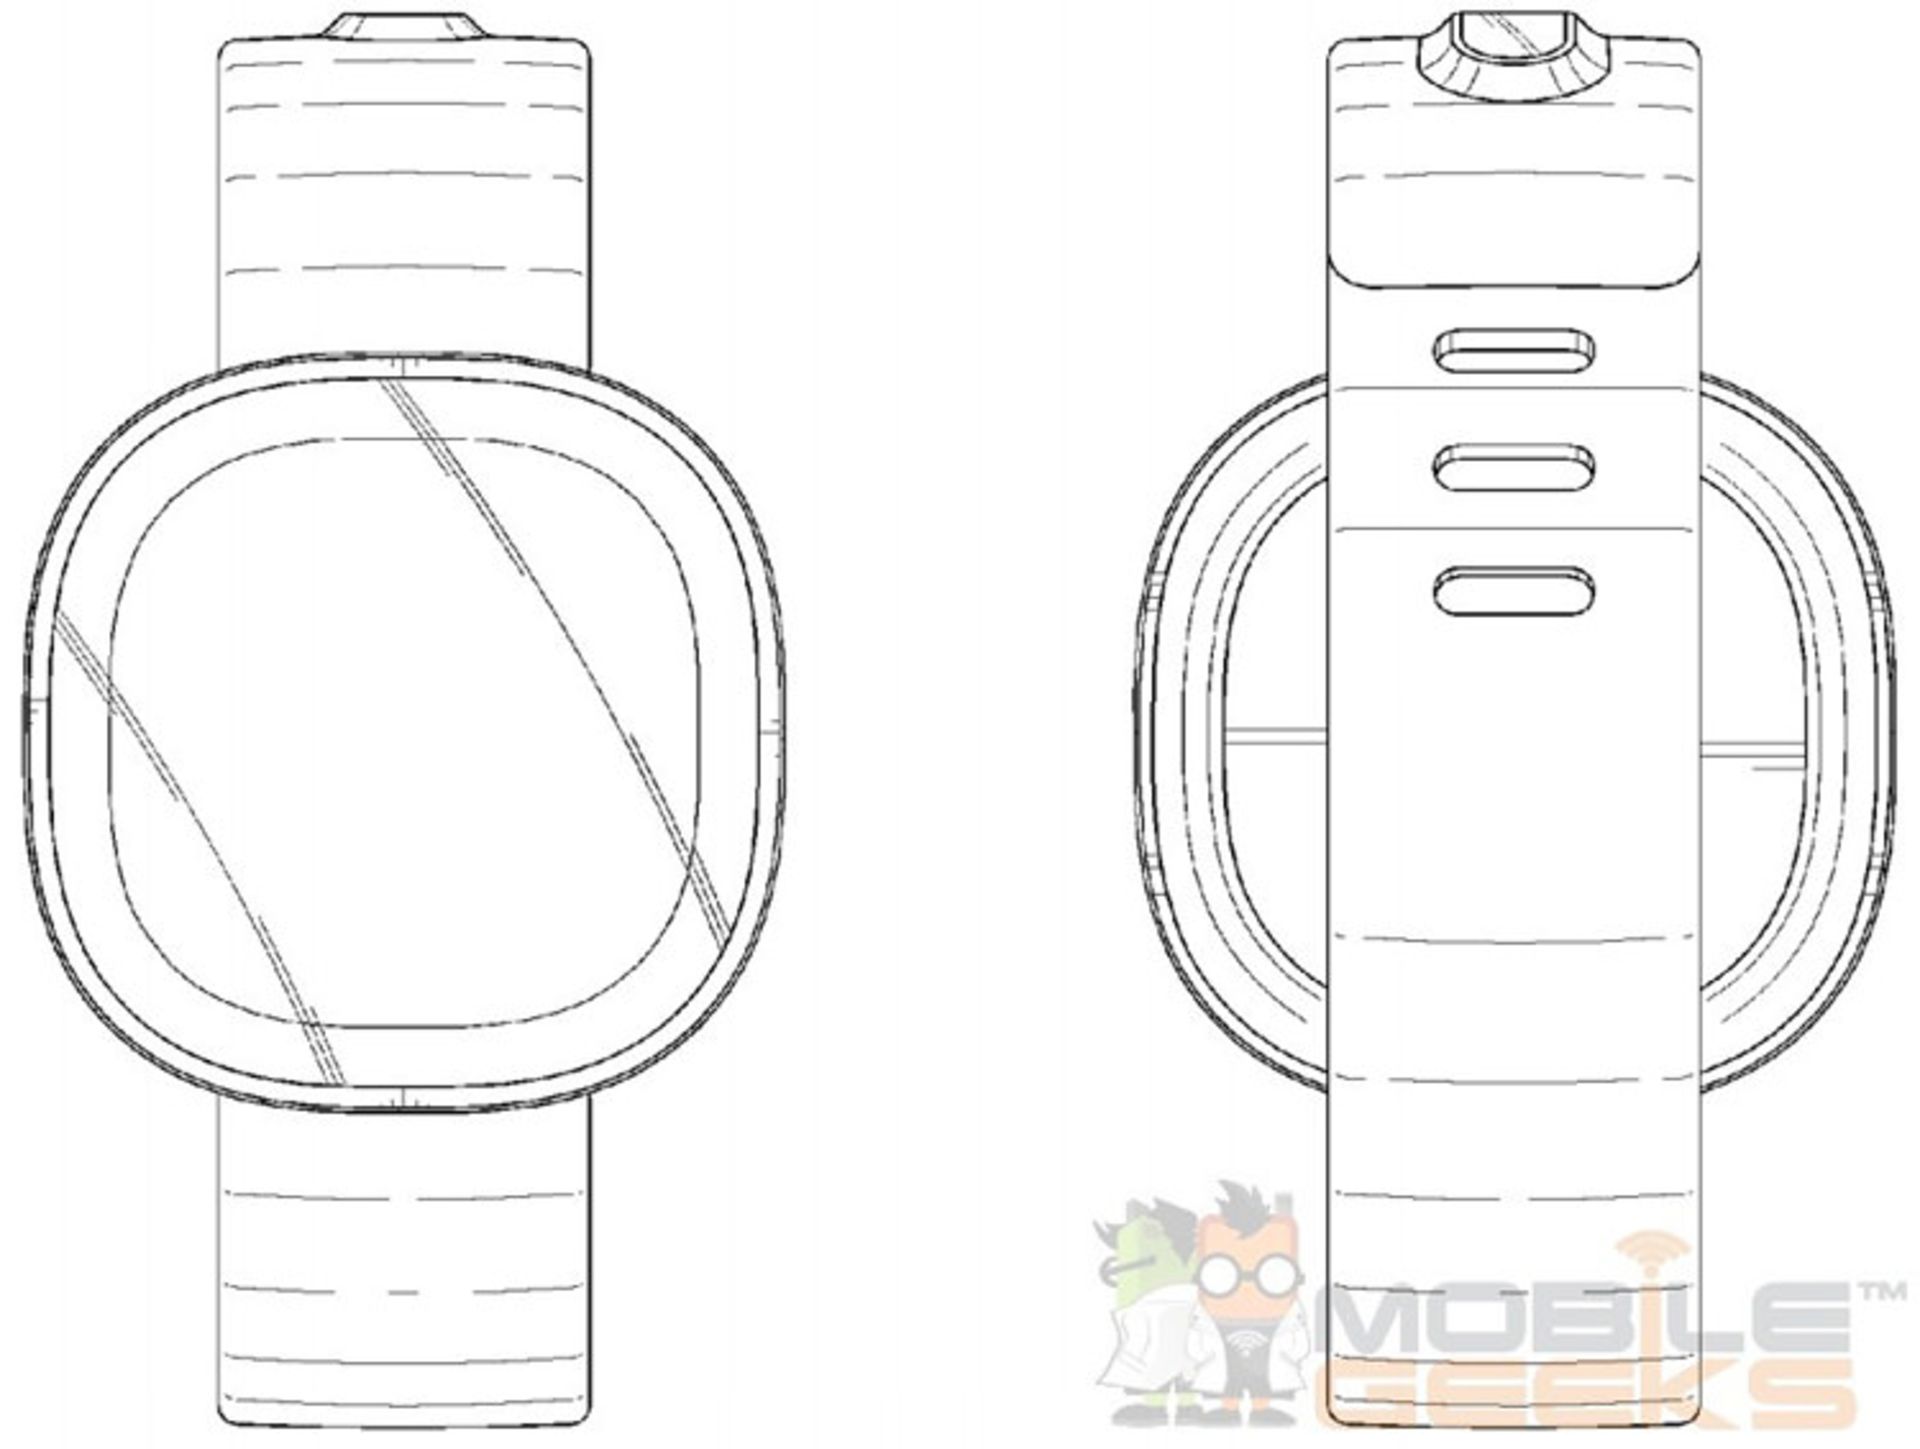 samsung-smartwatch-patent-0014